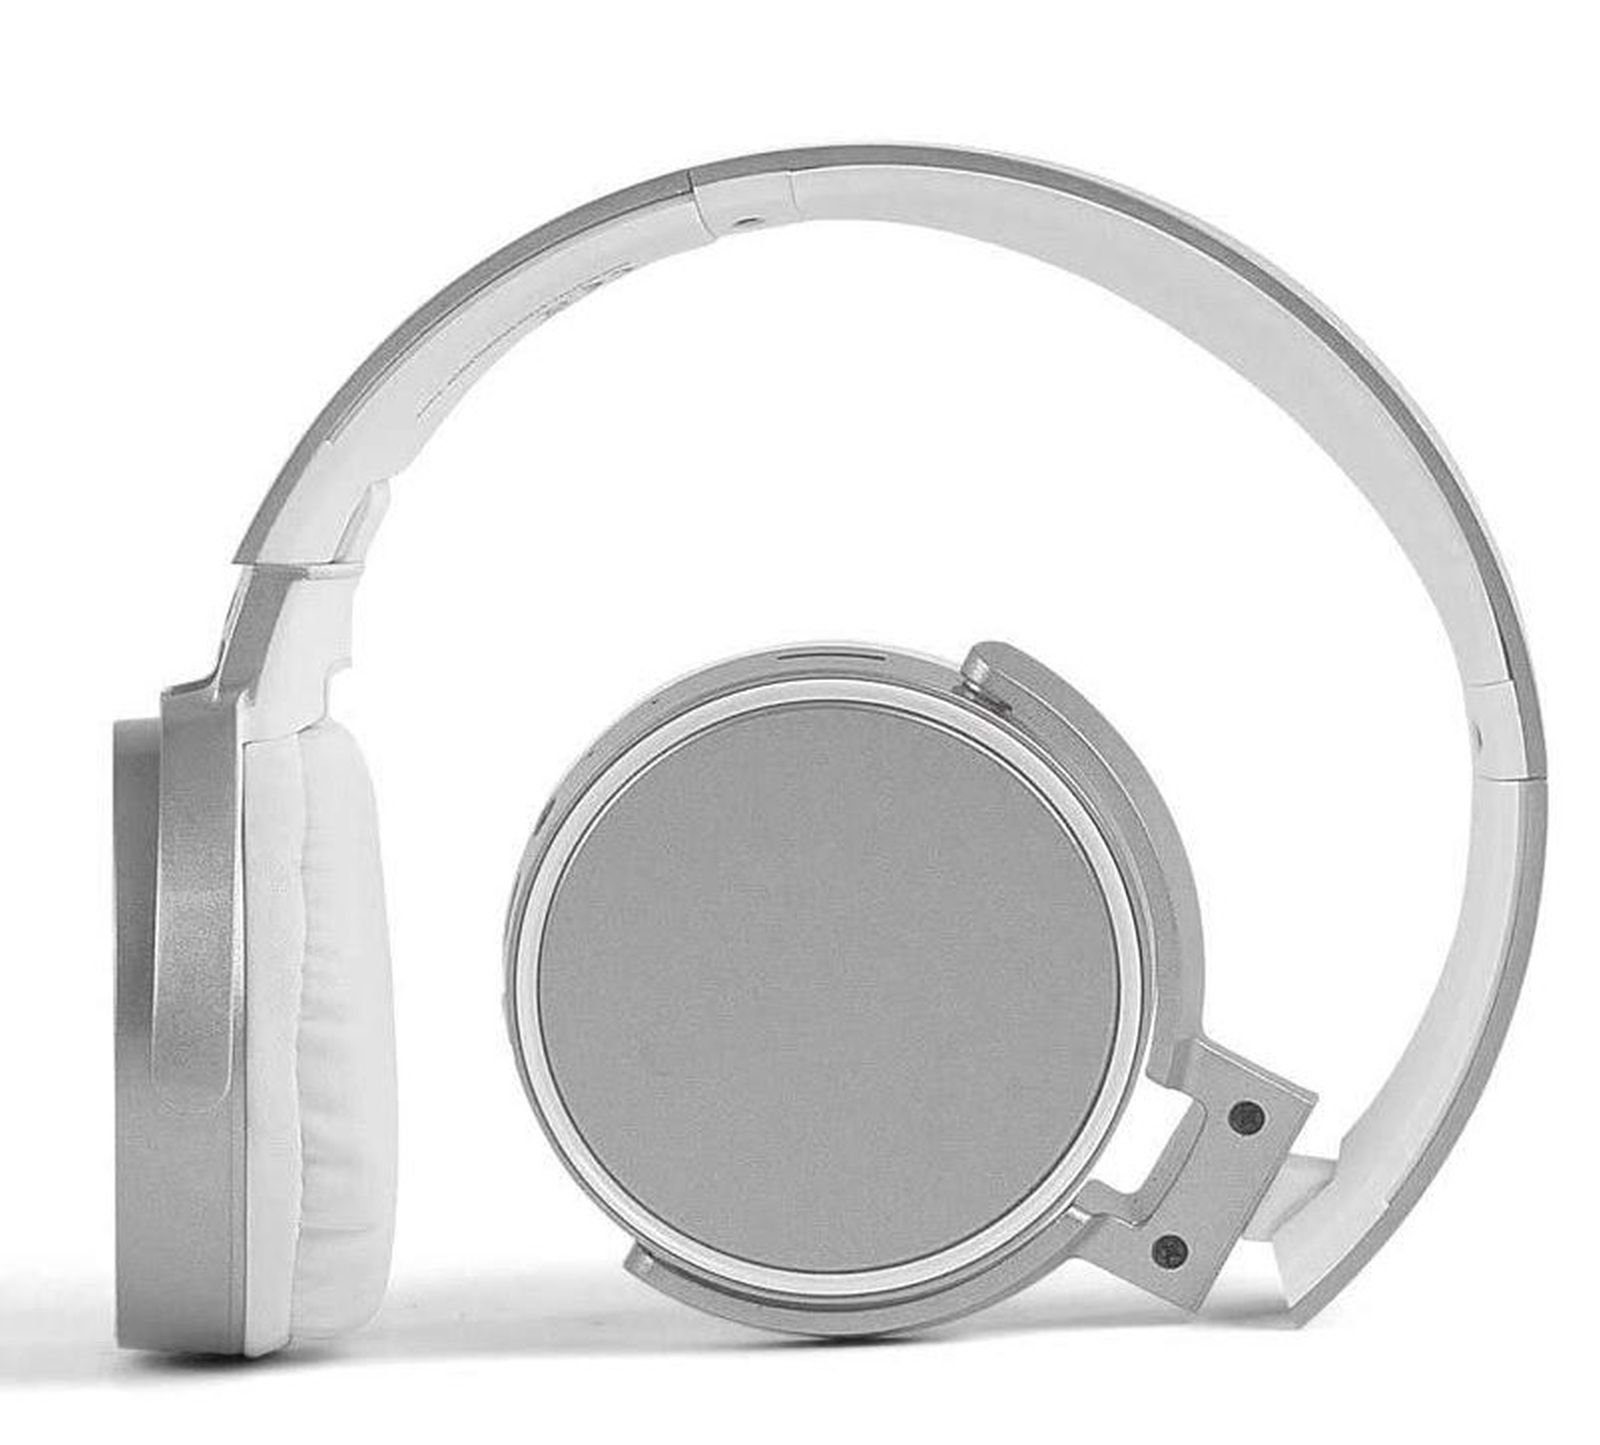 LIVOO LIVOO Weiß TES200S Bluetooth USB Ear Ohrpolster Mikro Kopfhörer Faltbar Over